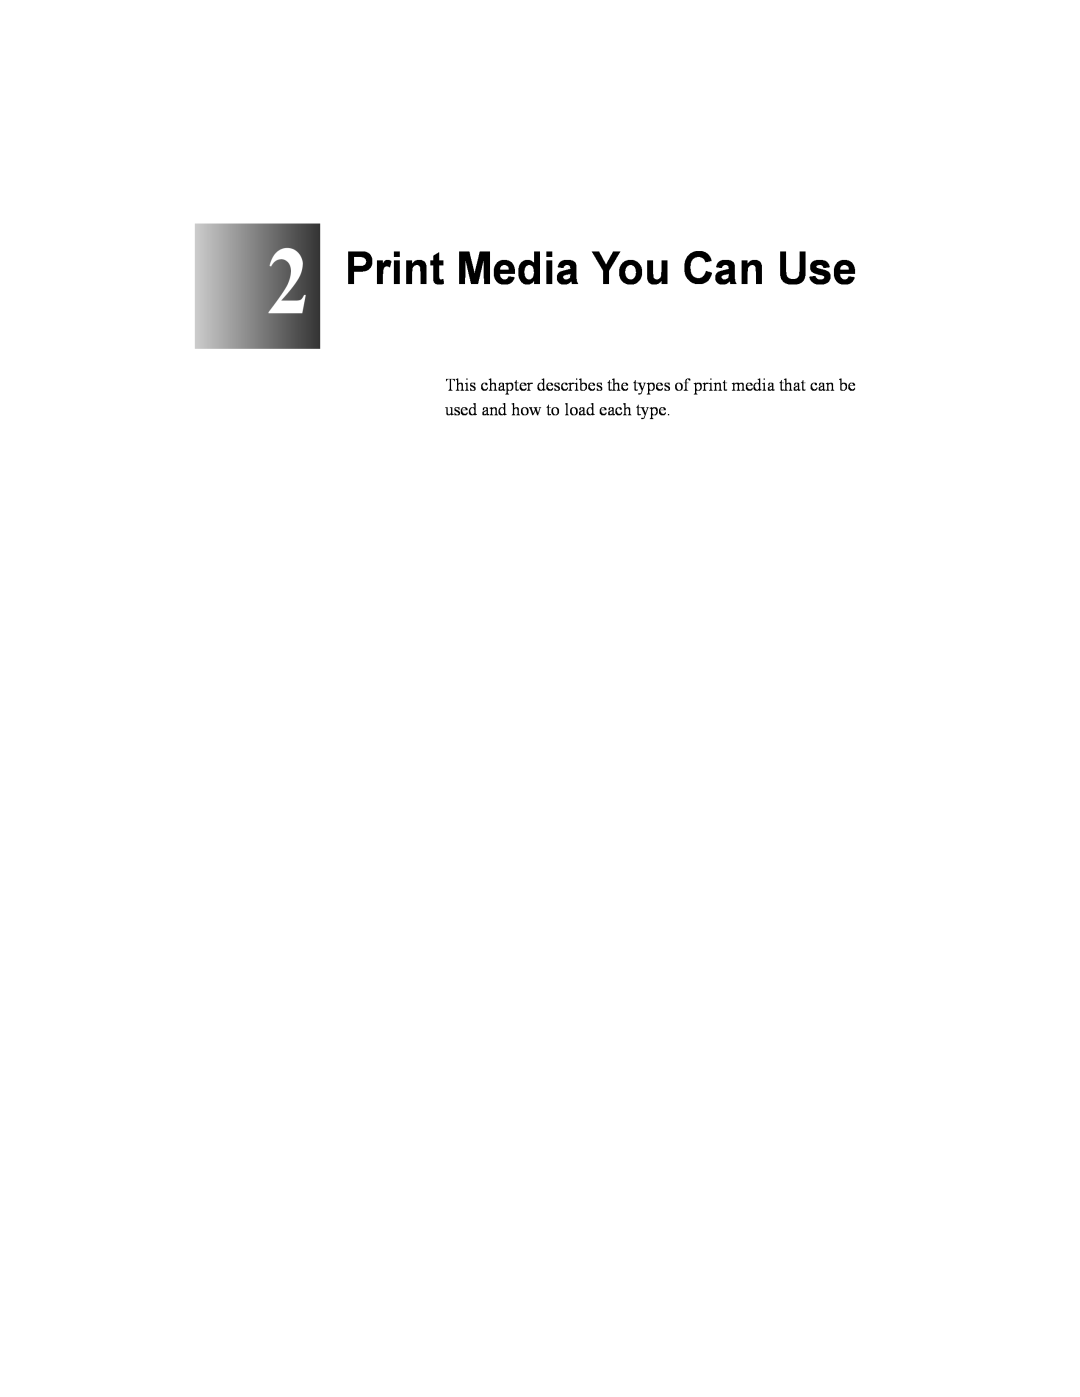 Canon W2200 manual Print Media You Can Use 